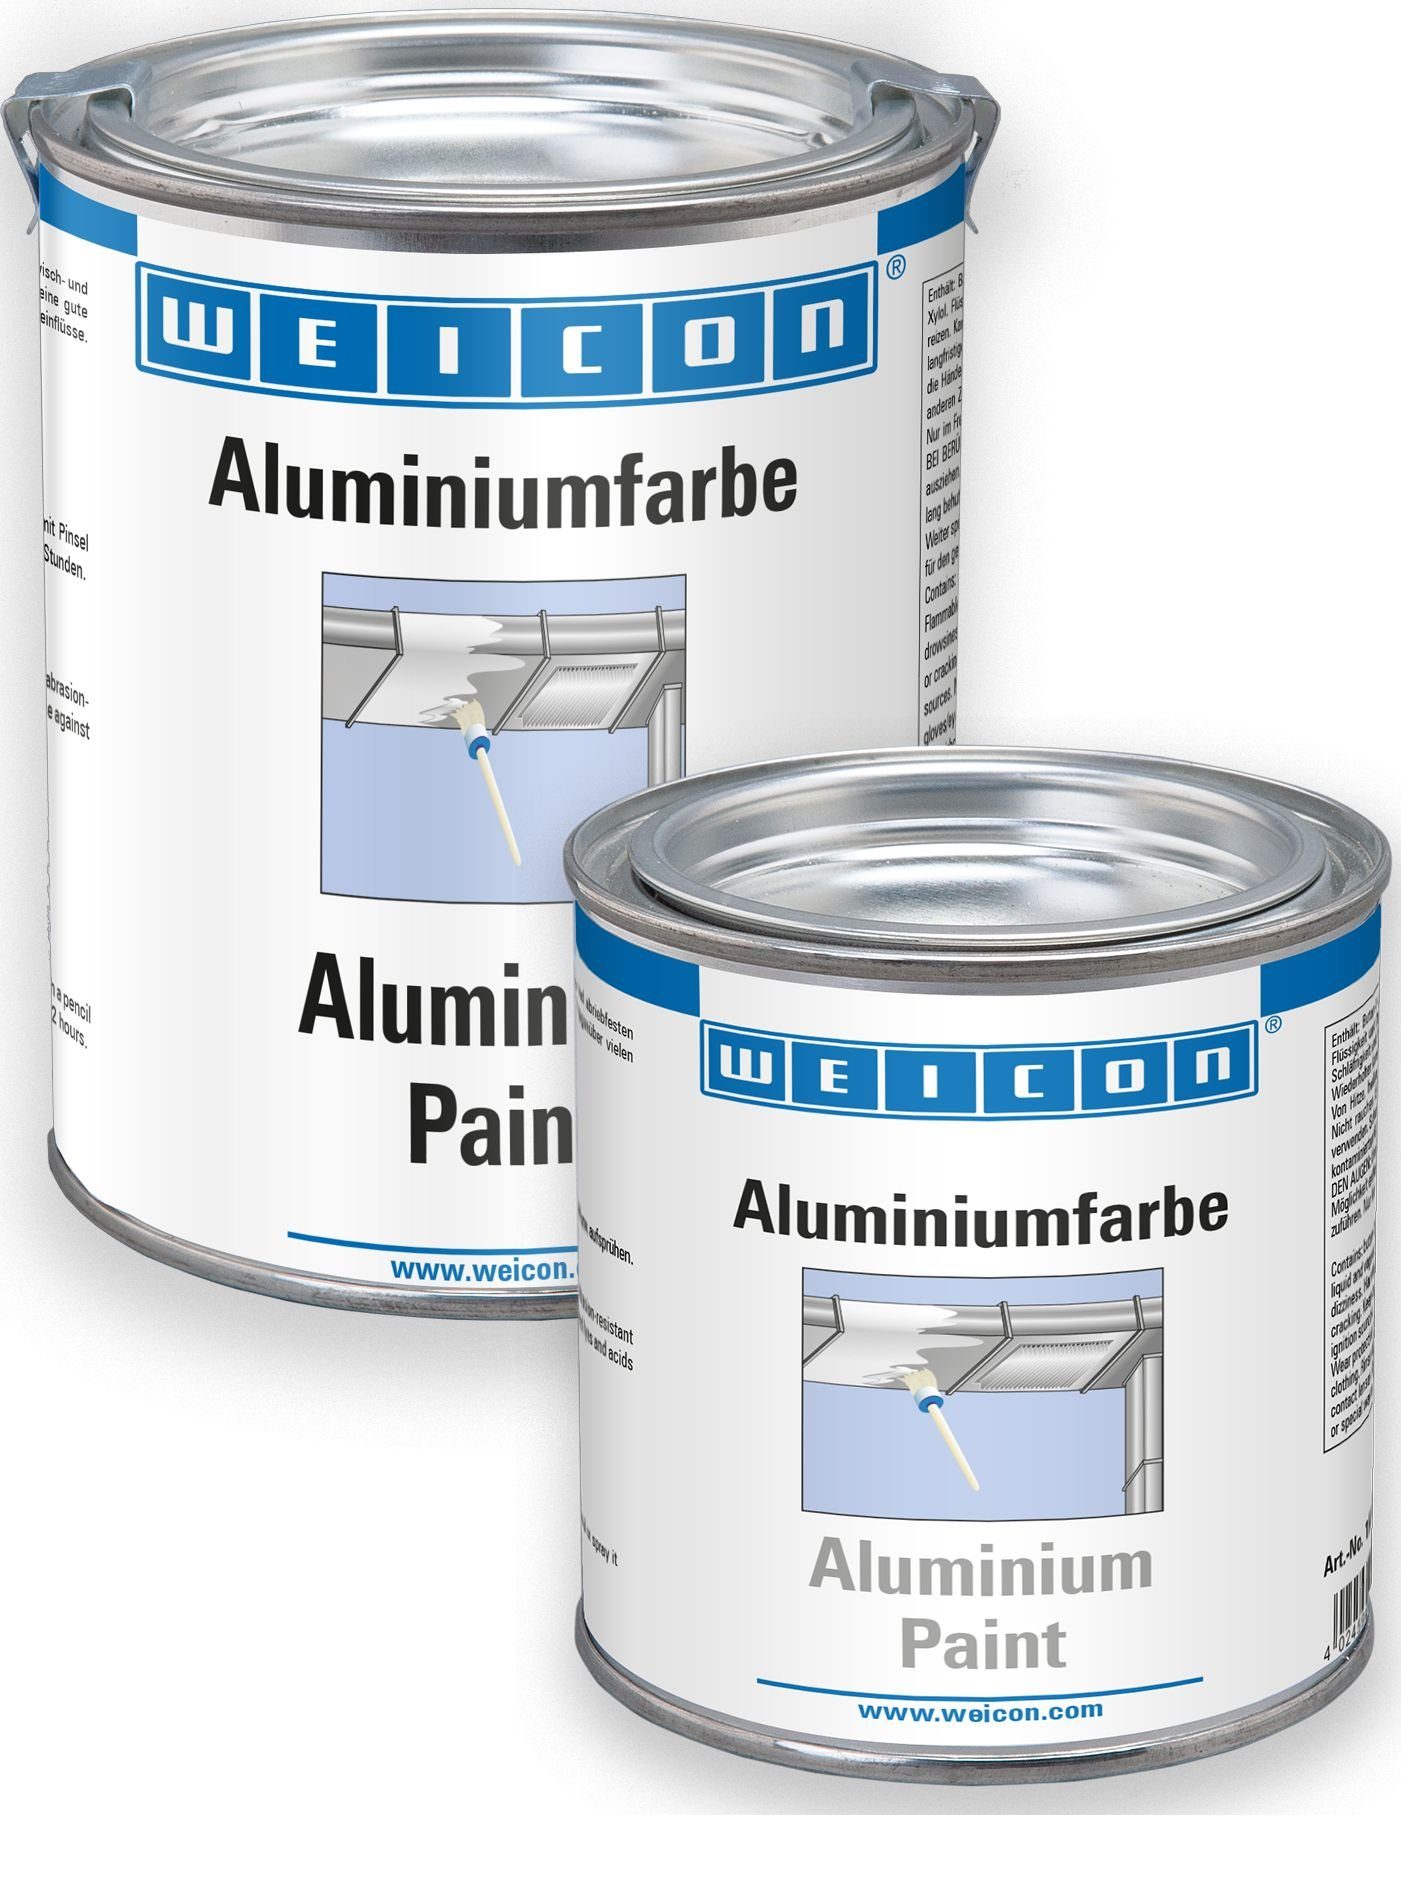 Korrosionsschutz Metallglanzfarbe WEICON aus Aluminiumpigmentbeschichtung Aluminiumfarbe,